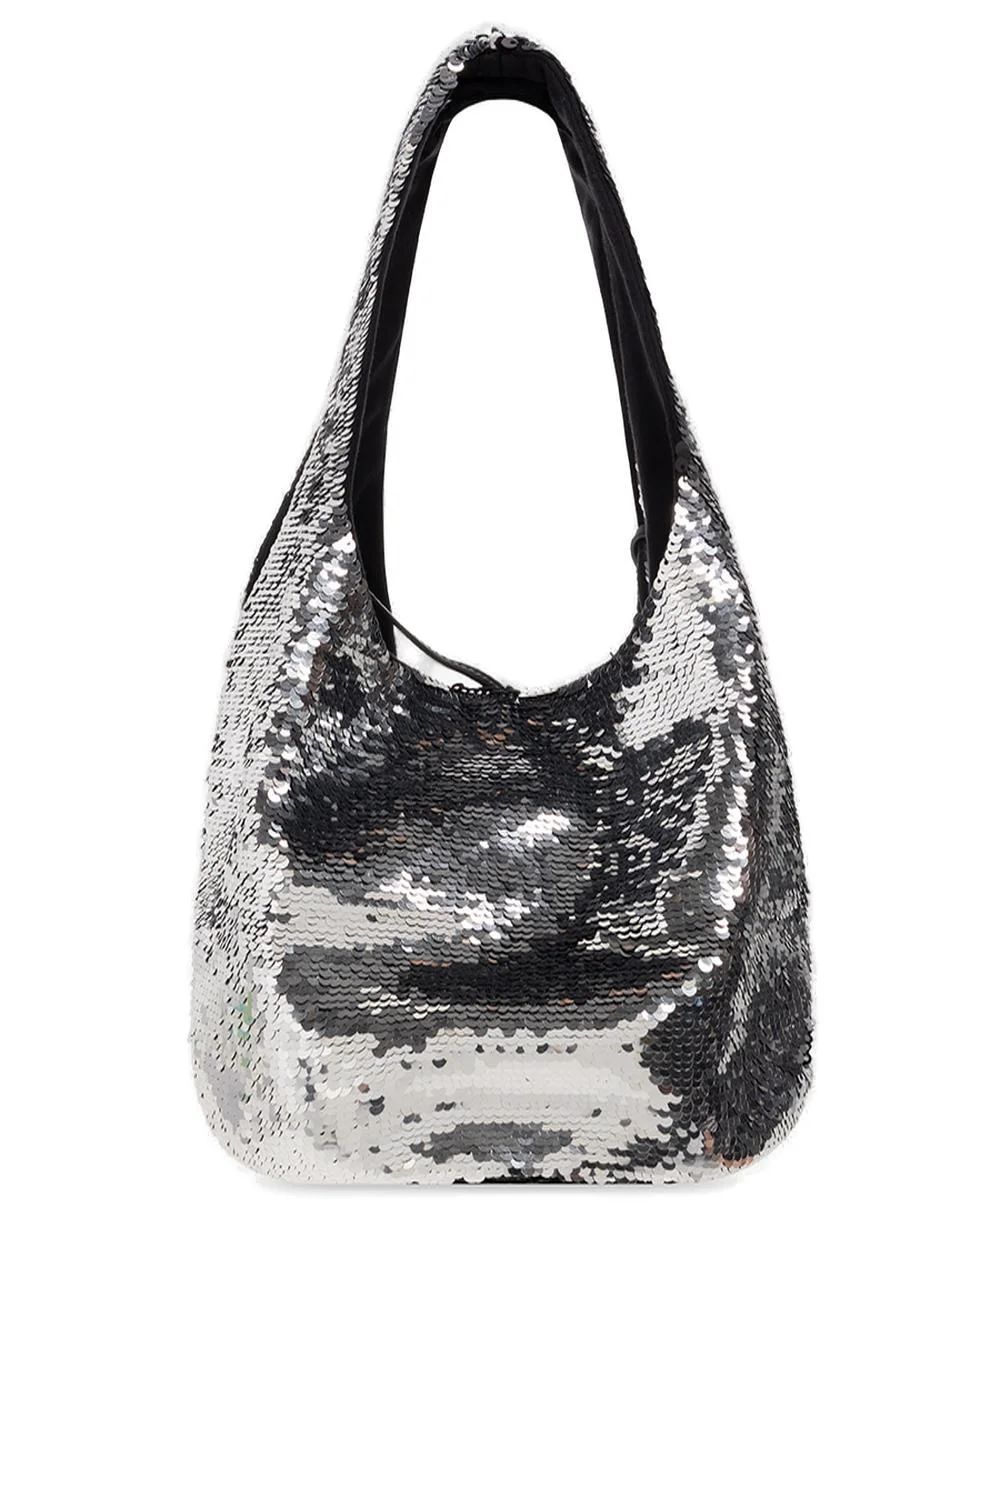 JW Anderson Sequinned Mini Top Handle Bag | Cettire Global